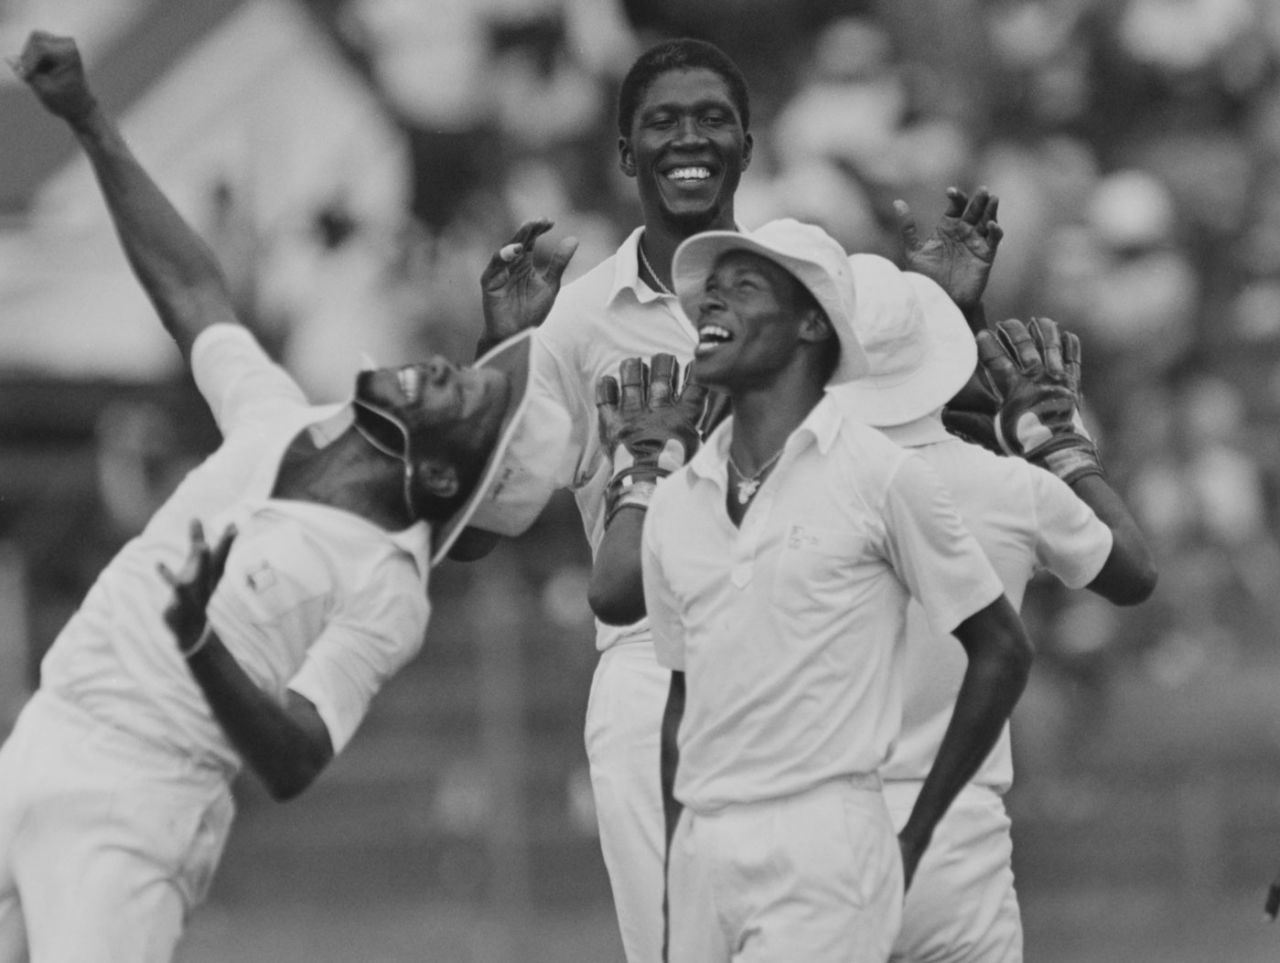 Joel Garner and his team-mates celebrate a wicket, 1986